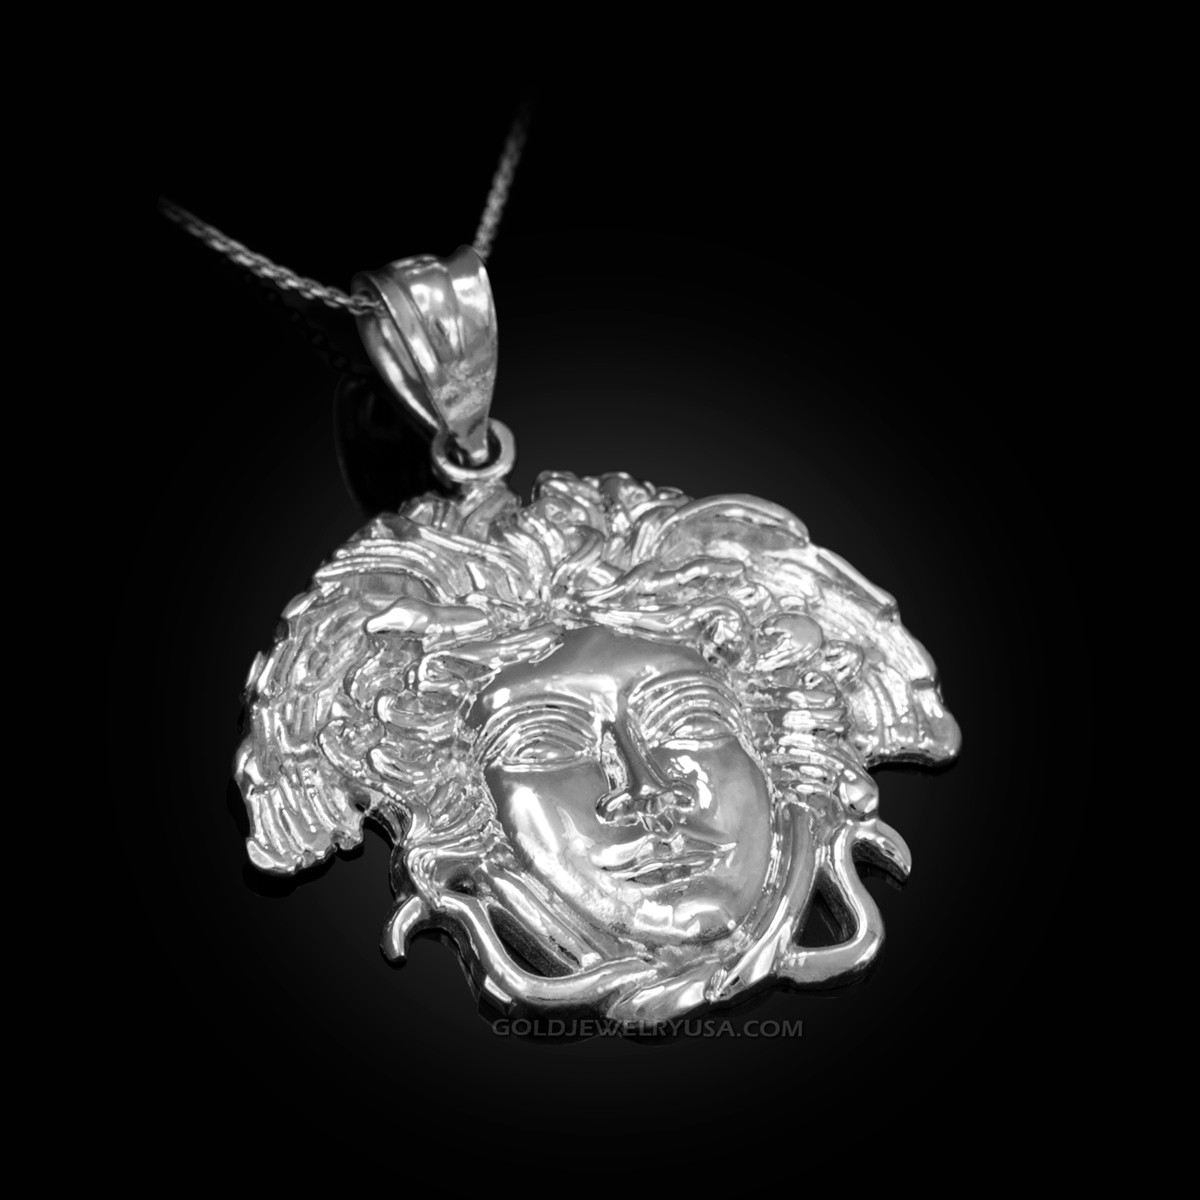 Medusa Necklace Greek Mythology Sterling Silver Pendant 